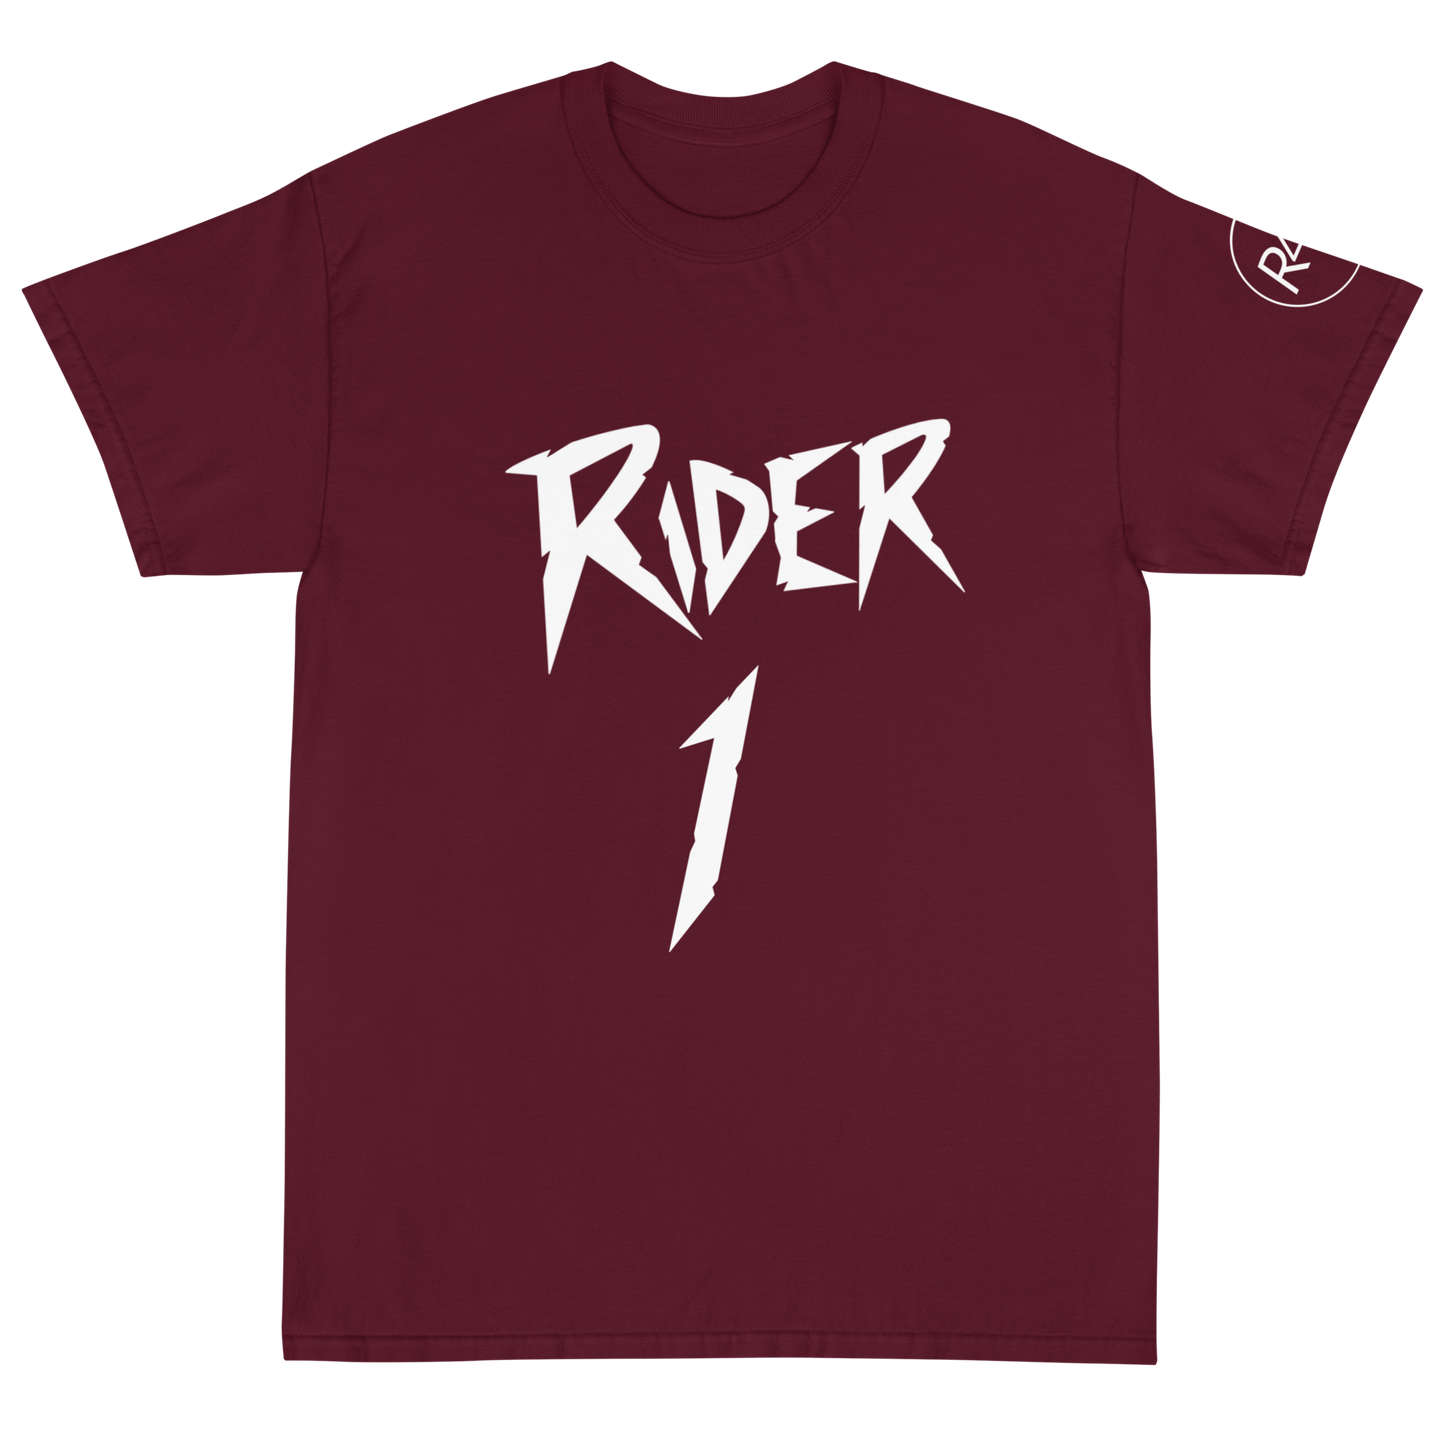 RIDER Jersey T-Shirt - Mr. Dripington